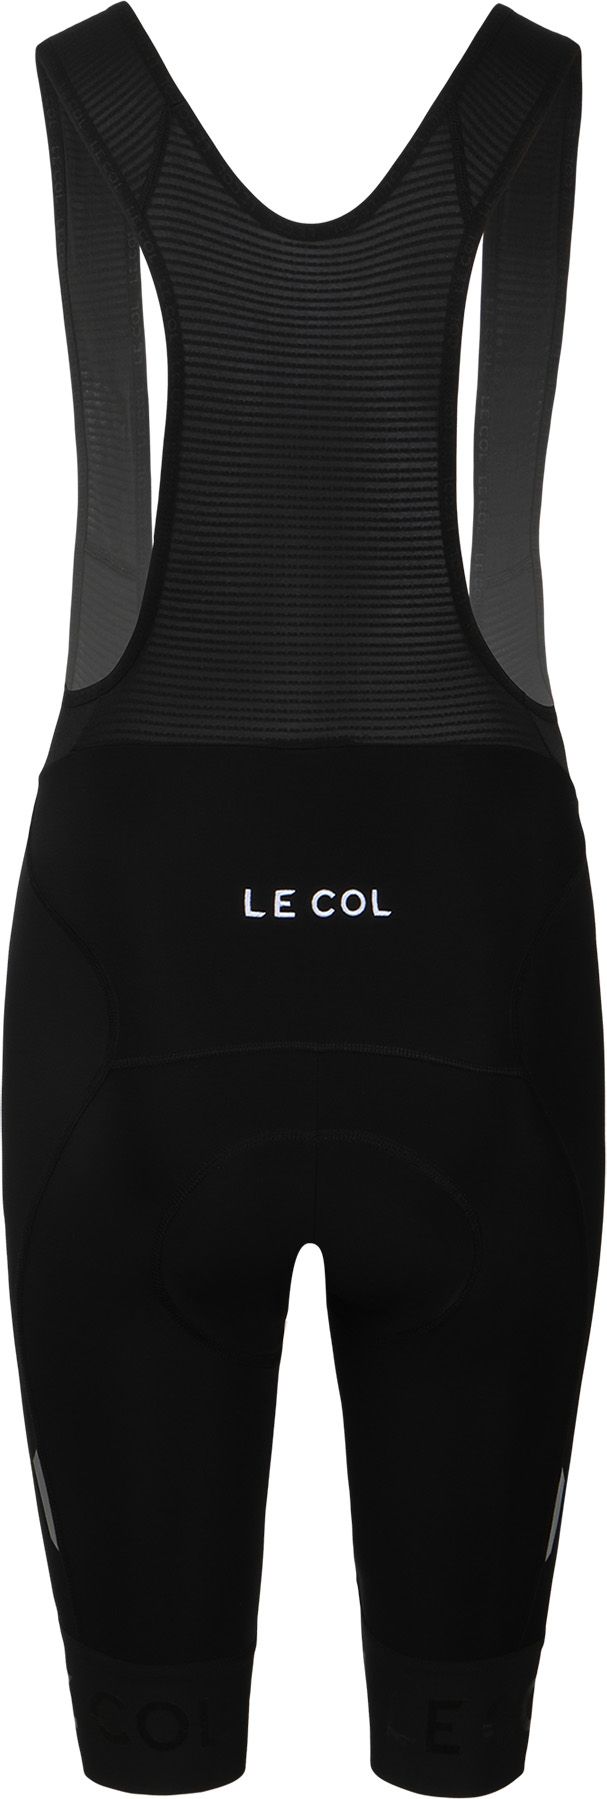 Le Col Men's Pro Thermal Bib Shorts II